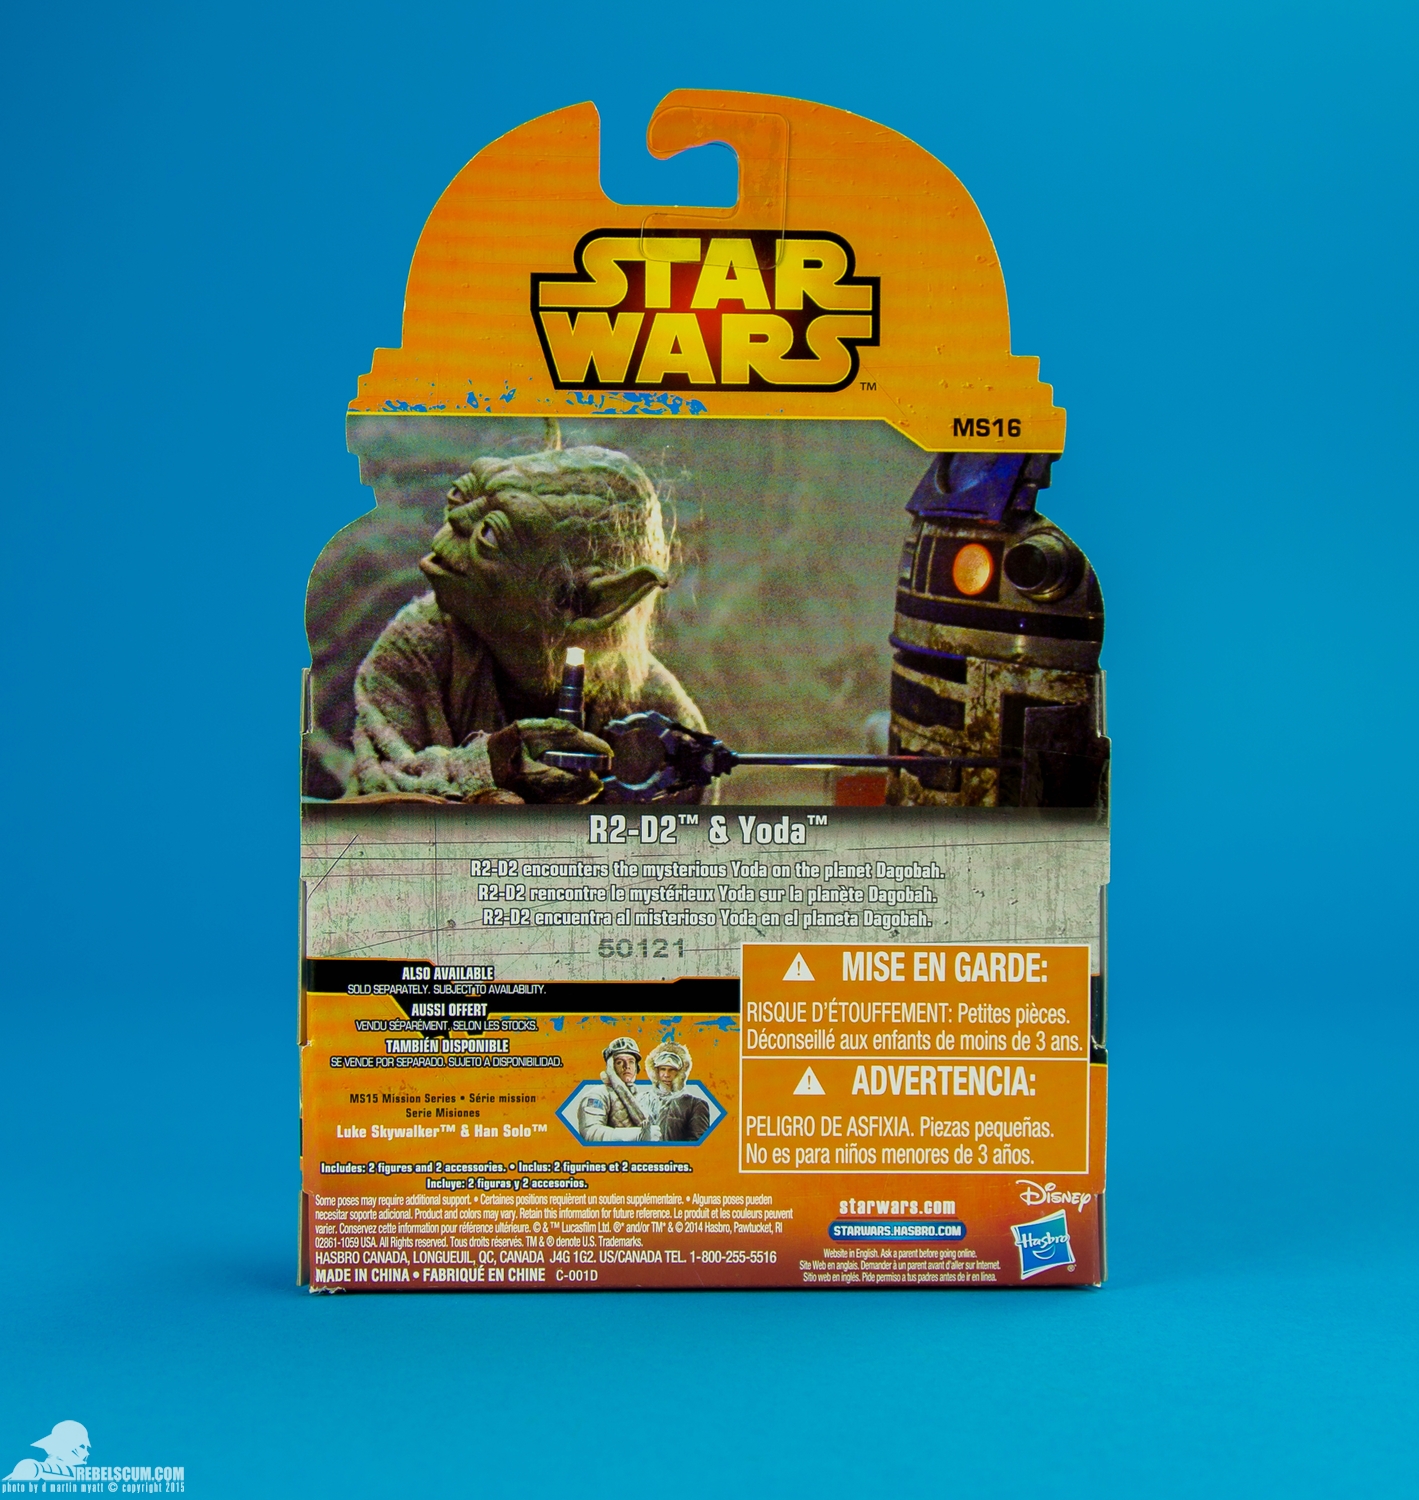 MS16-R2-D2-Yoda-Star-Wars-Rebels-Mission-Series-Hasbro-023.jpg